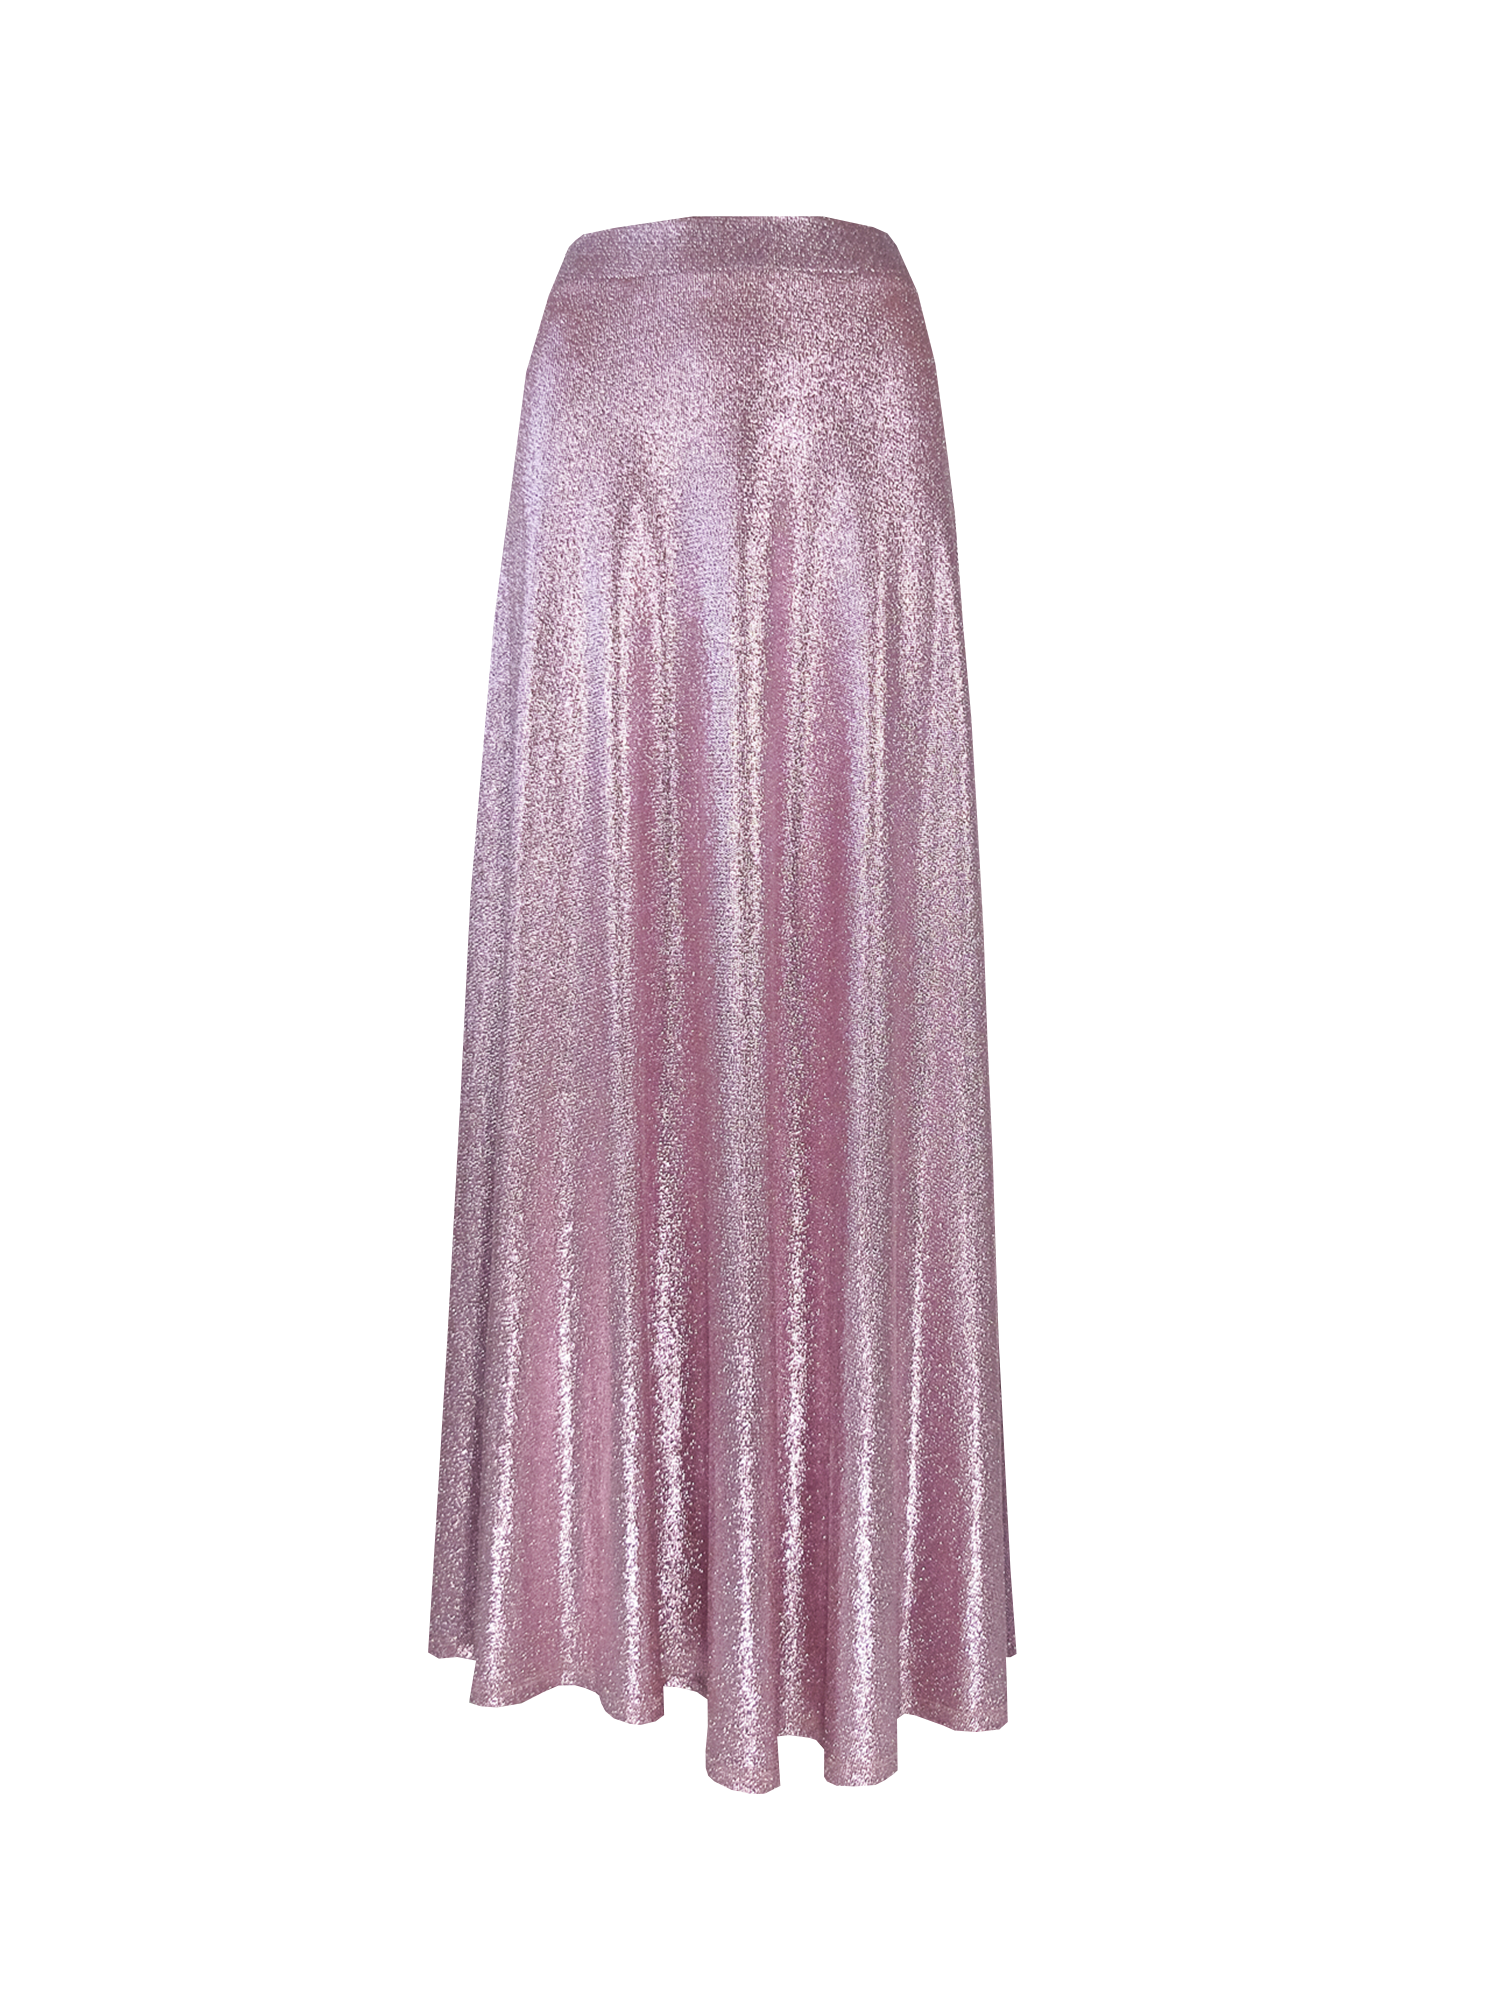 TOSCA - long skirt in pink lurex